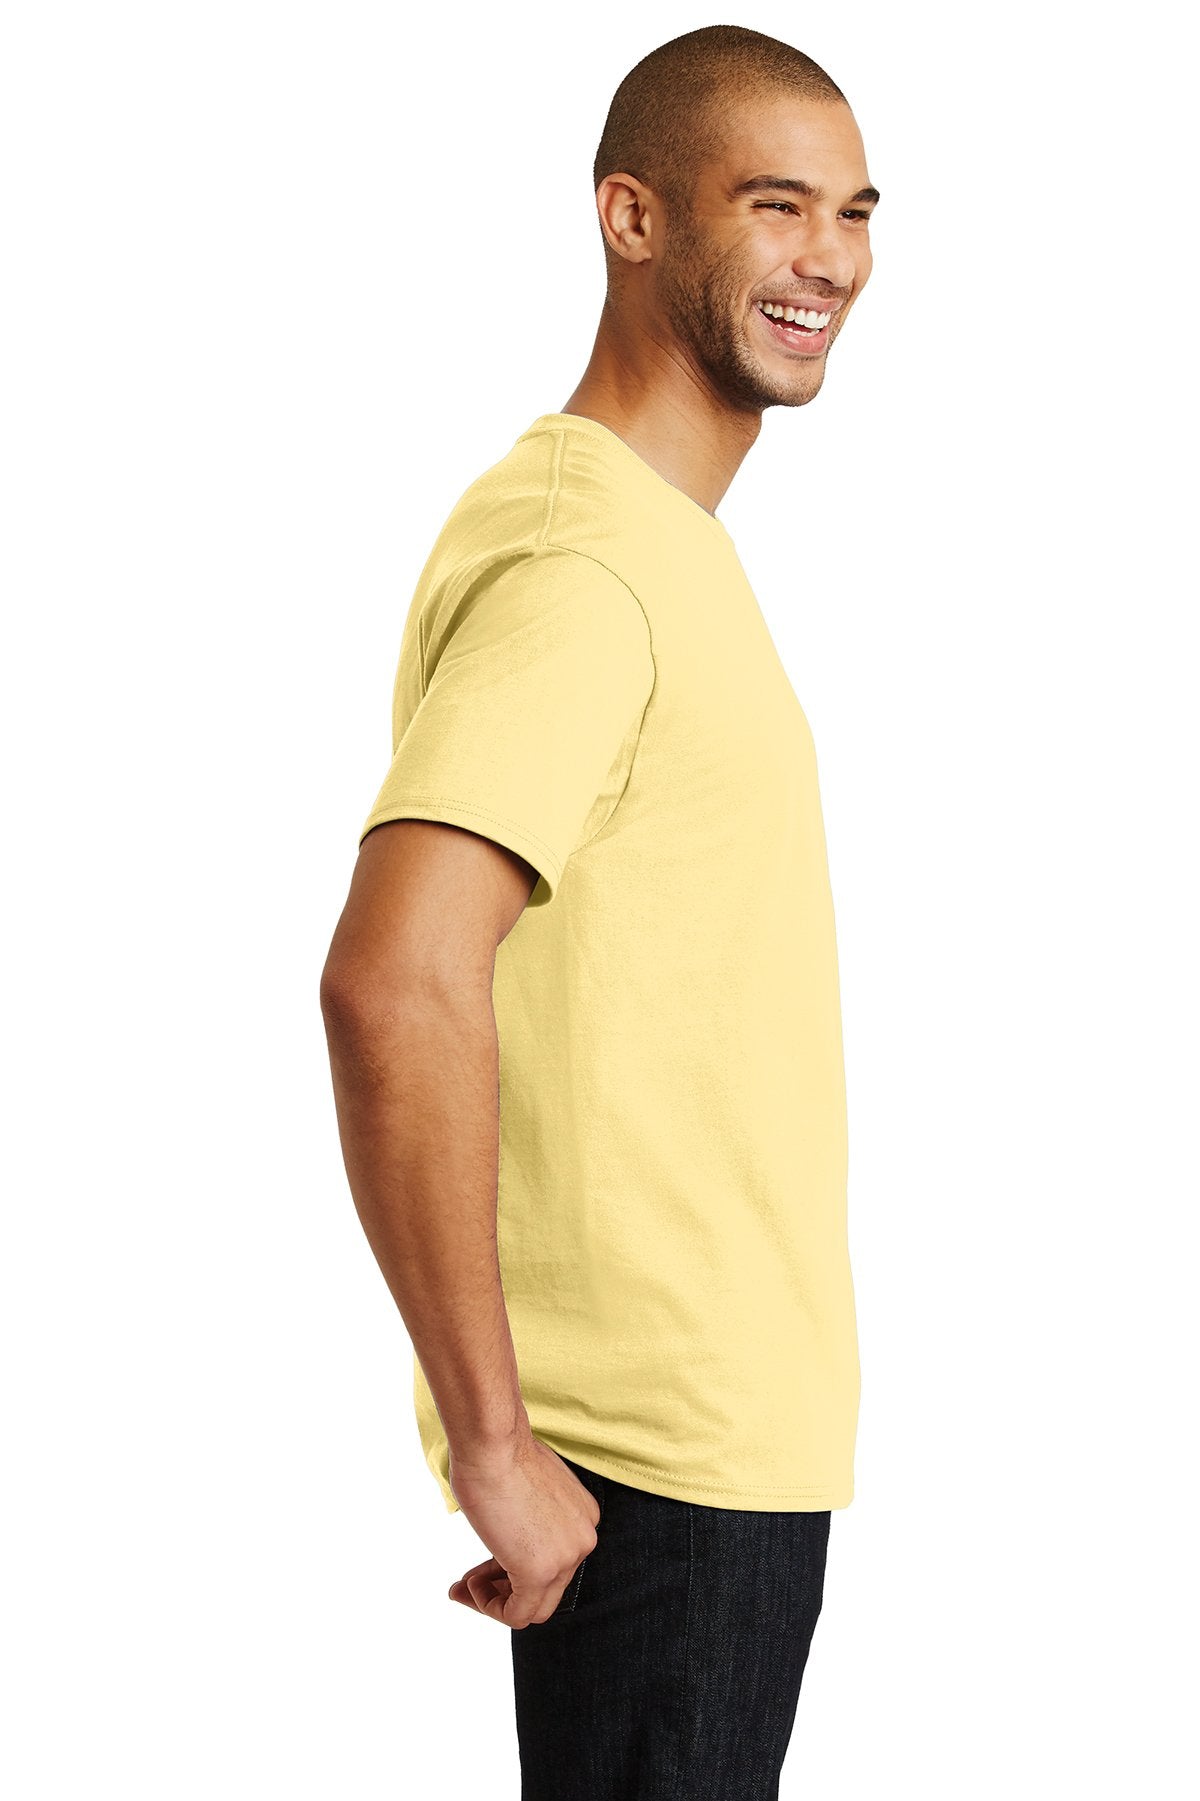 hanes tagless cotton t shirt 5250 daffodil yellow